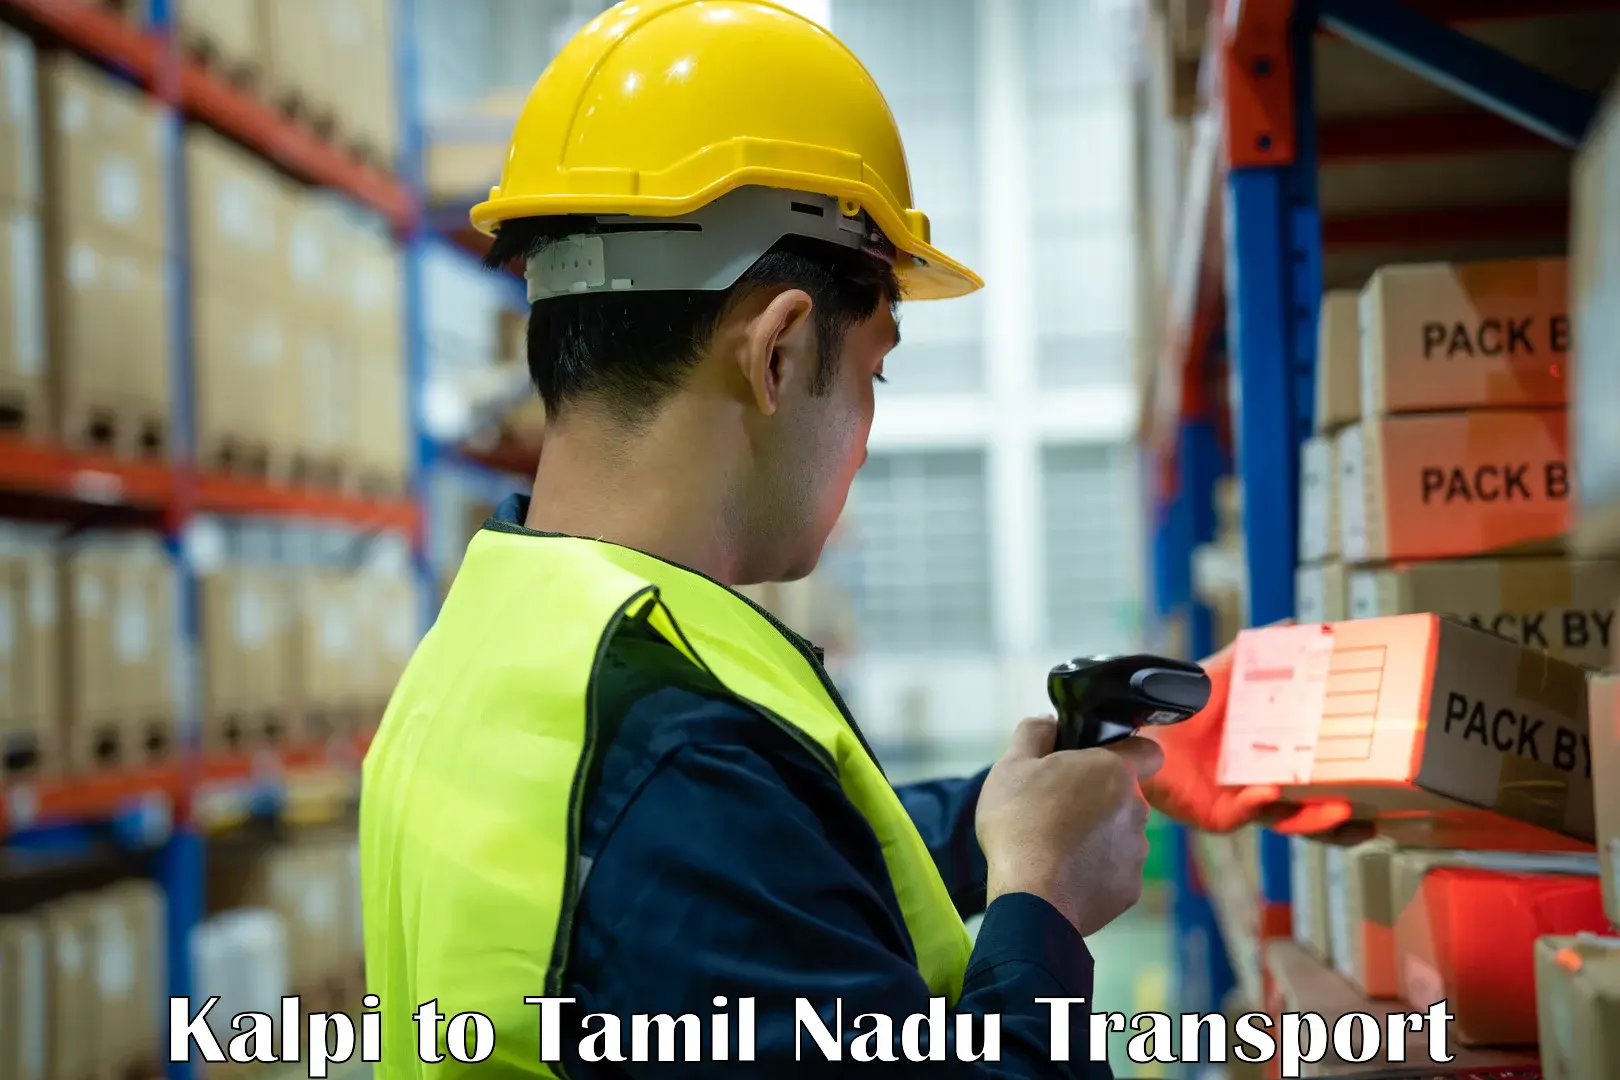 Bike transport service Kalpi to Tamil Nadu